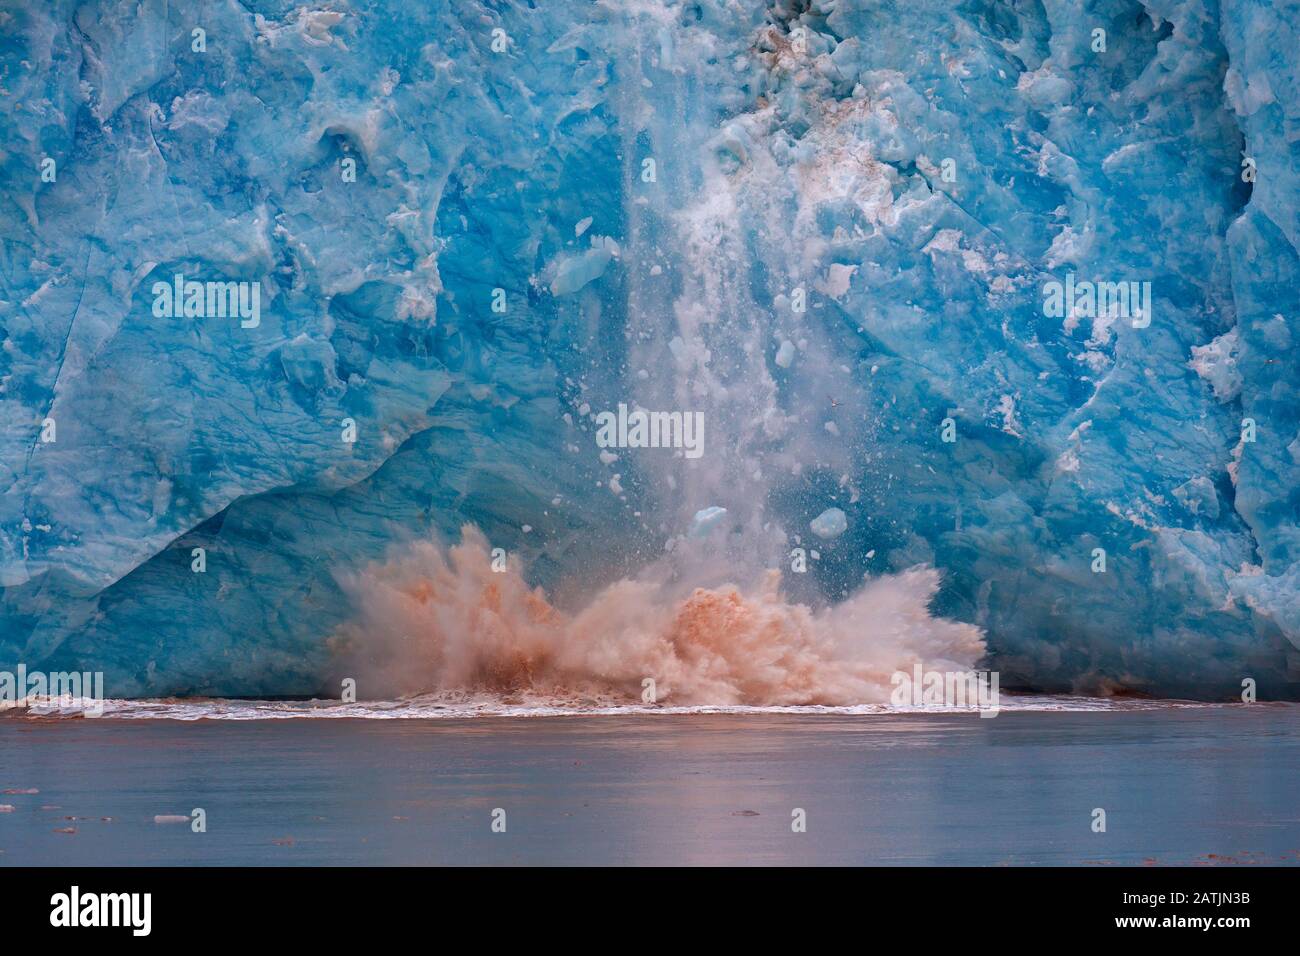 Riesiger Eisklumpen, der vom Rand des Kongsbreen-Gletschers bricht, der in Kongsfjorden, Spitzbergen/Spitzbergen, Norwegen kalbt Stockfoto